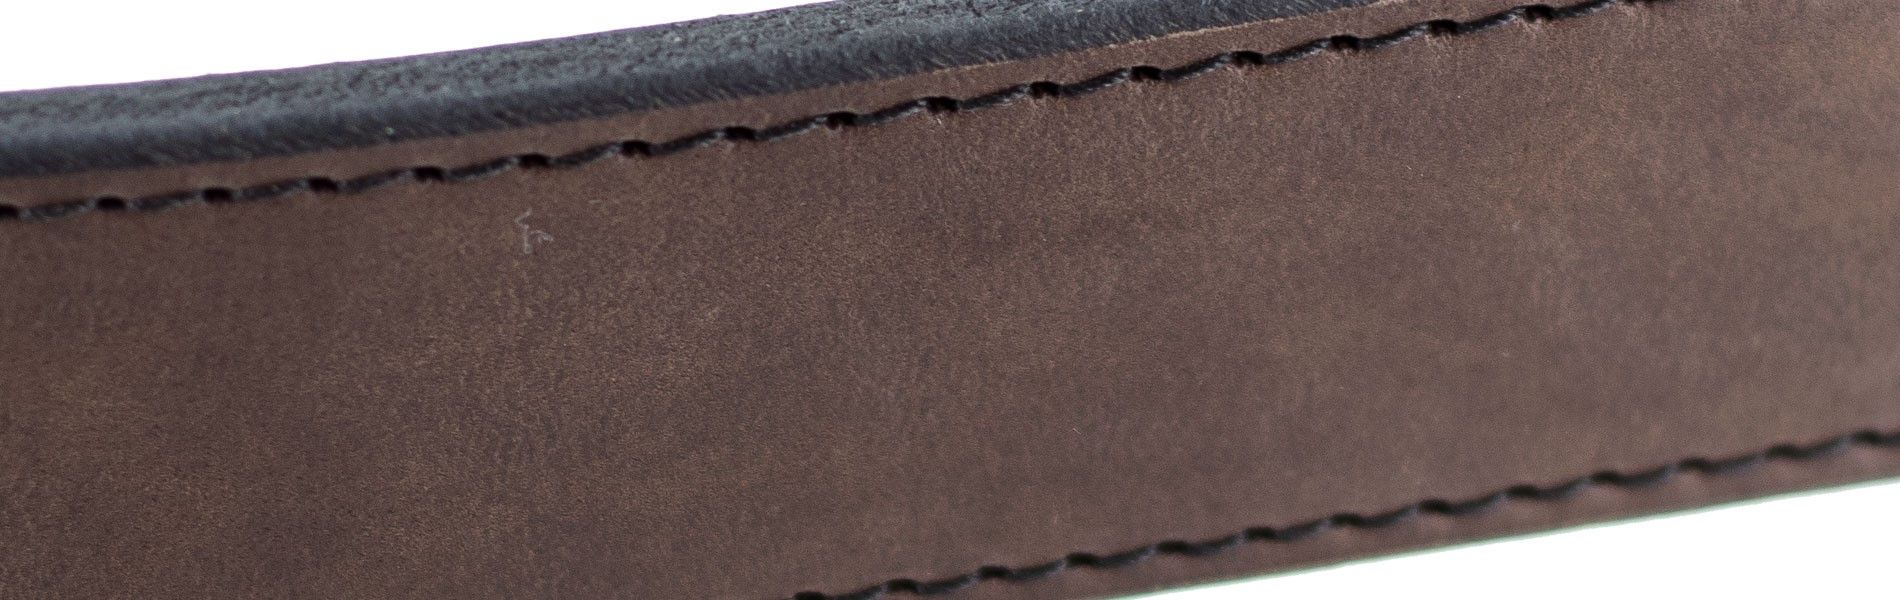 Hanks Extreme Gun Belt Stitching Detail